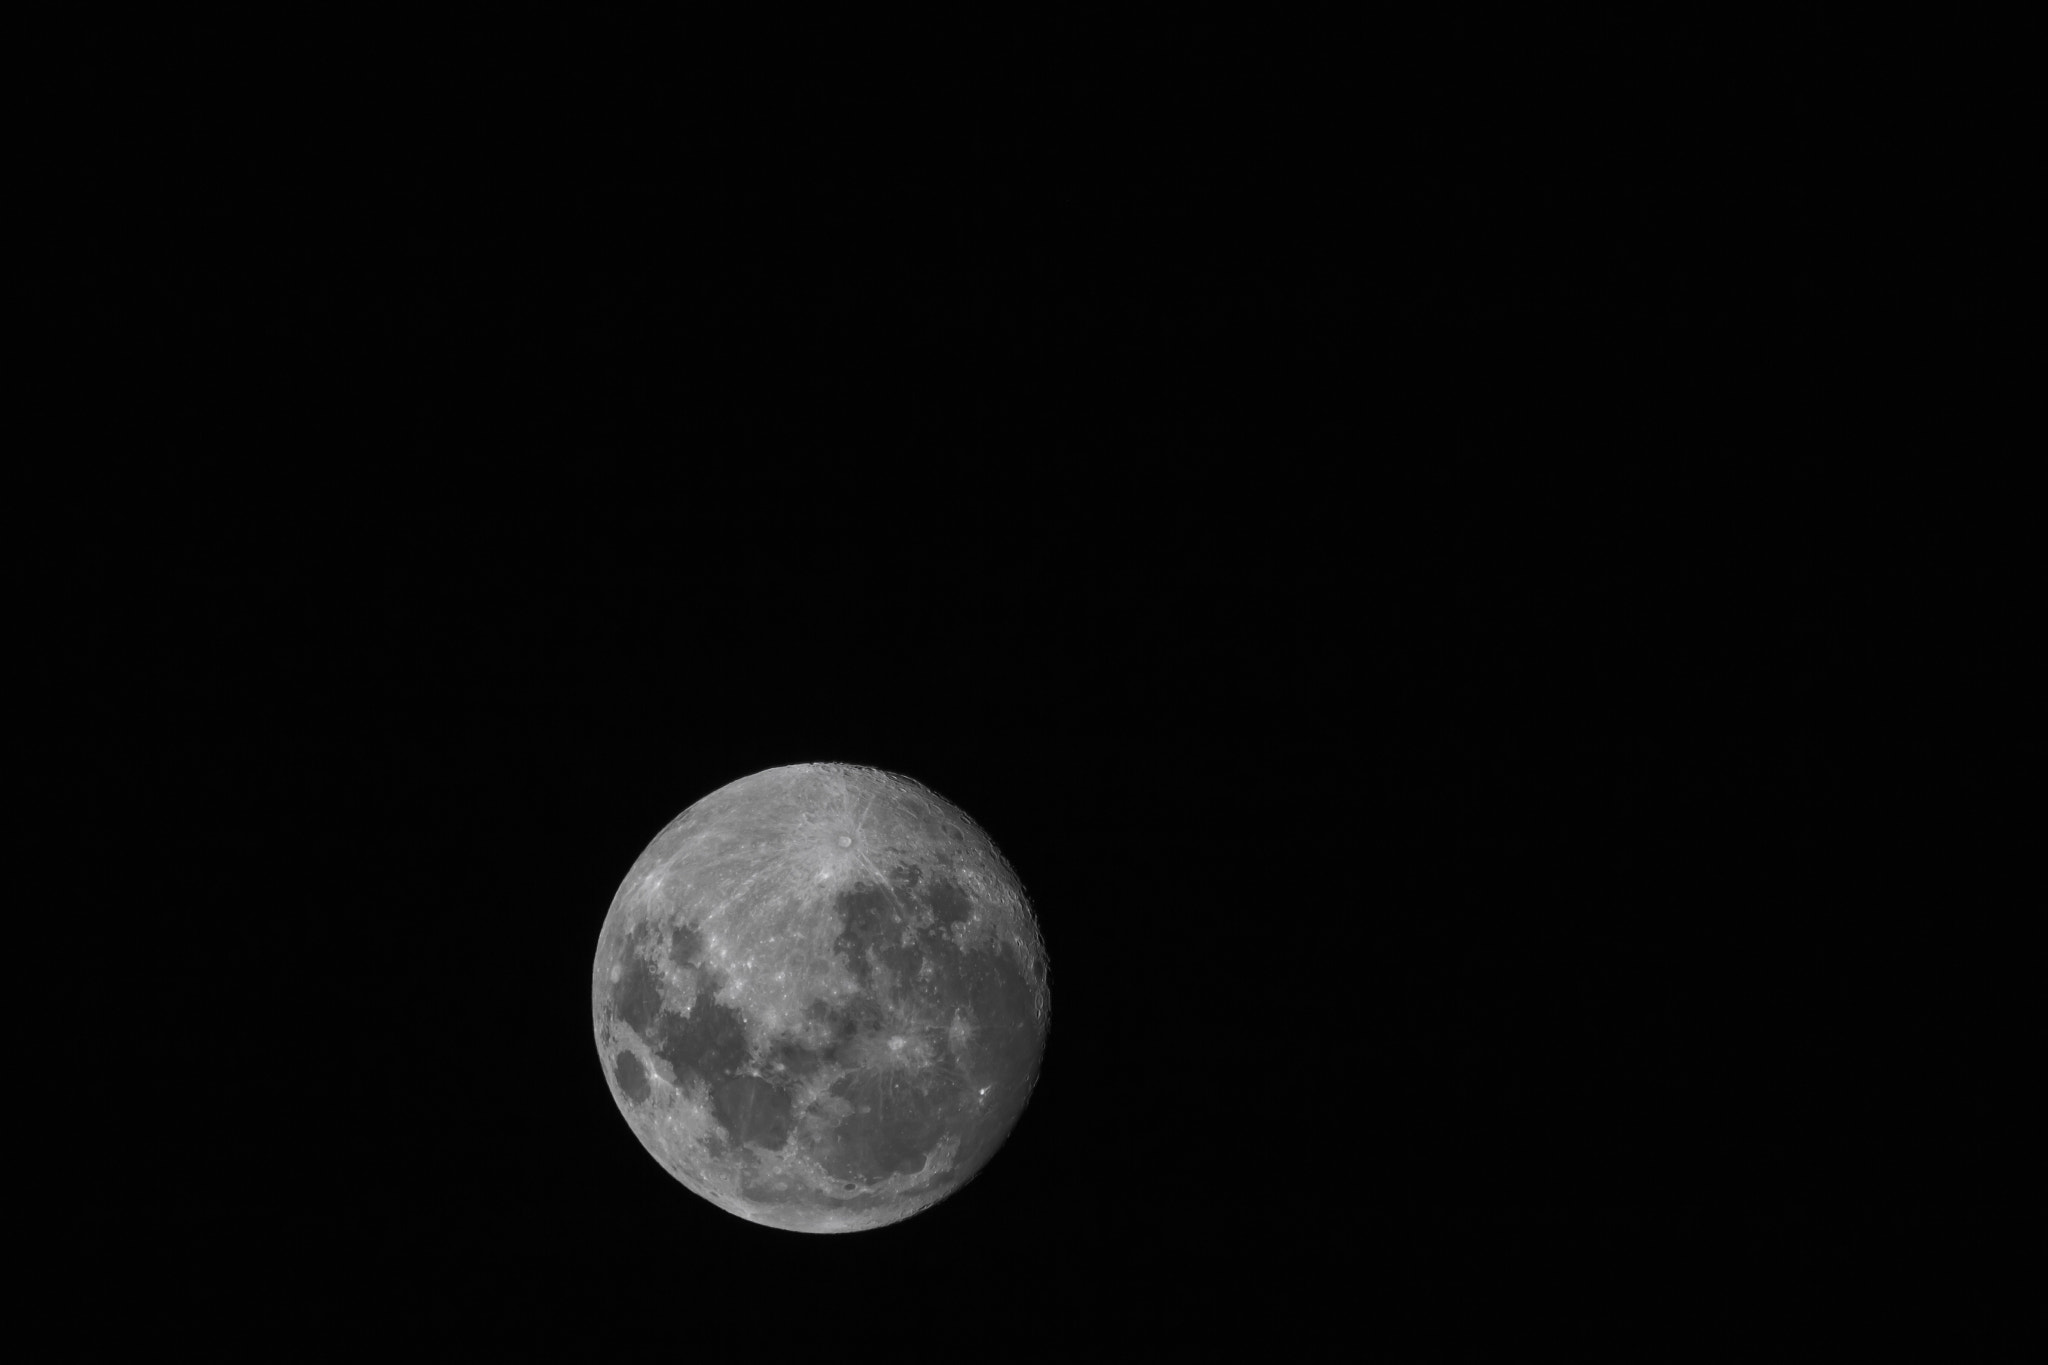 Sigma APO Macro 150mm f/2.8 EX DG HSM + 2x sample photo. Basic moon photography